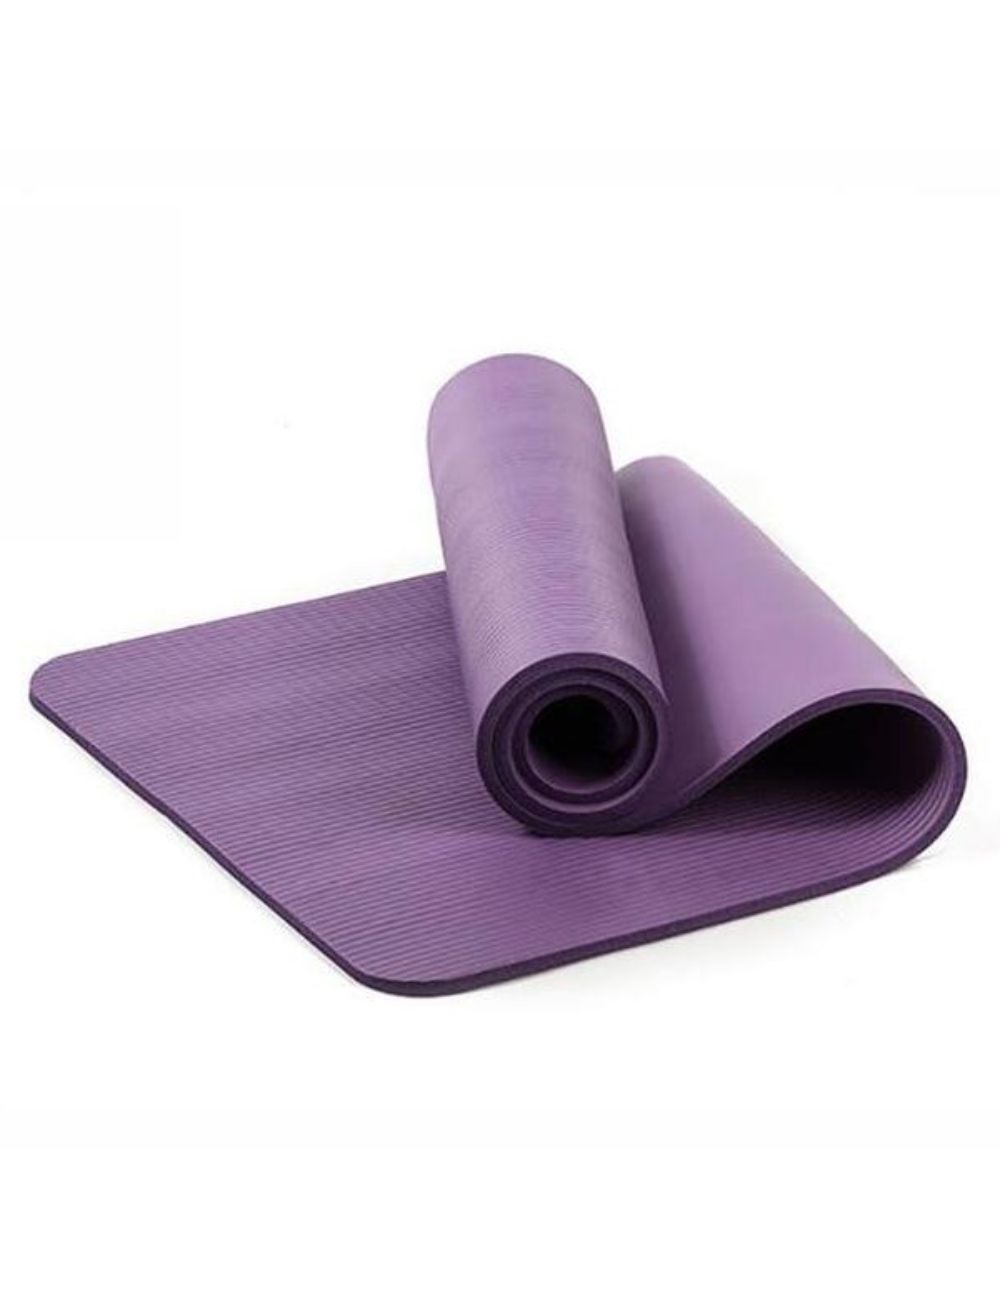 MYGA Yoga Mat Non Slip Yoga Pilates Dance Gym Studio or Home Workout